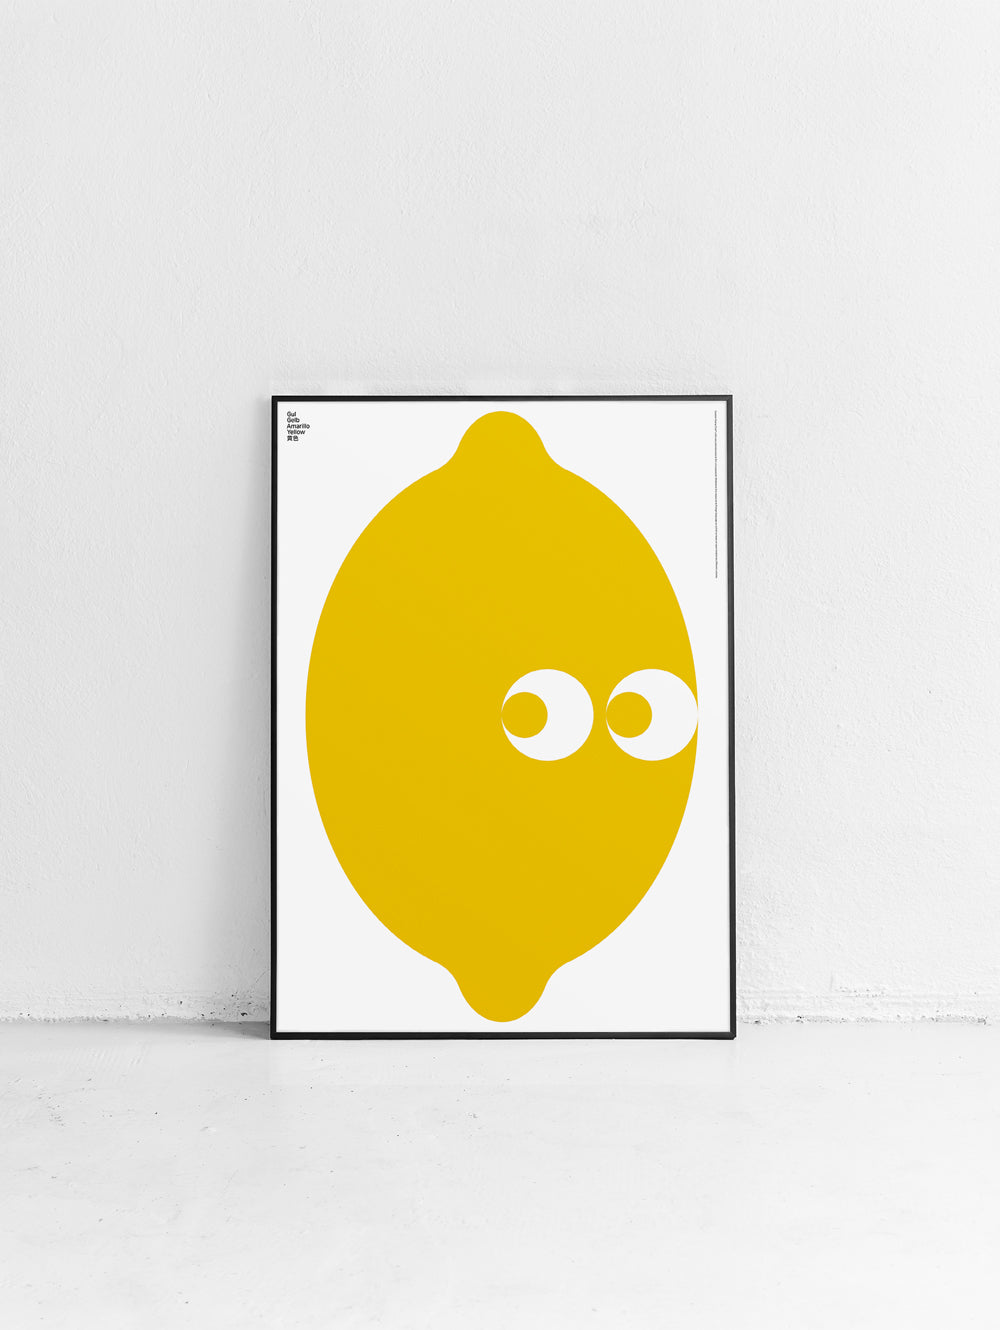 Translated Yellow Poster (Lemon)